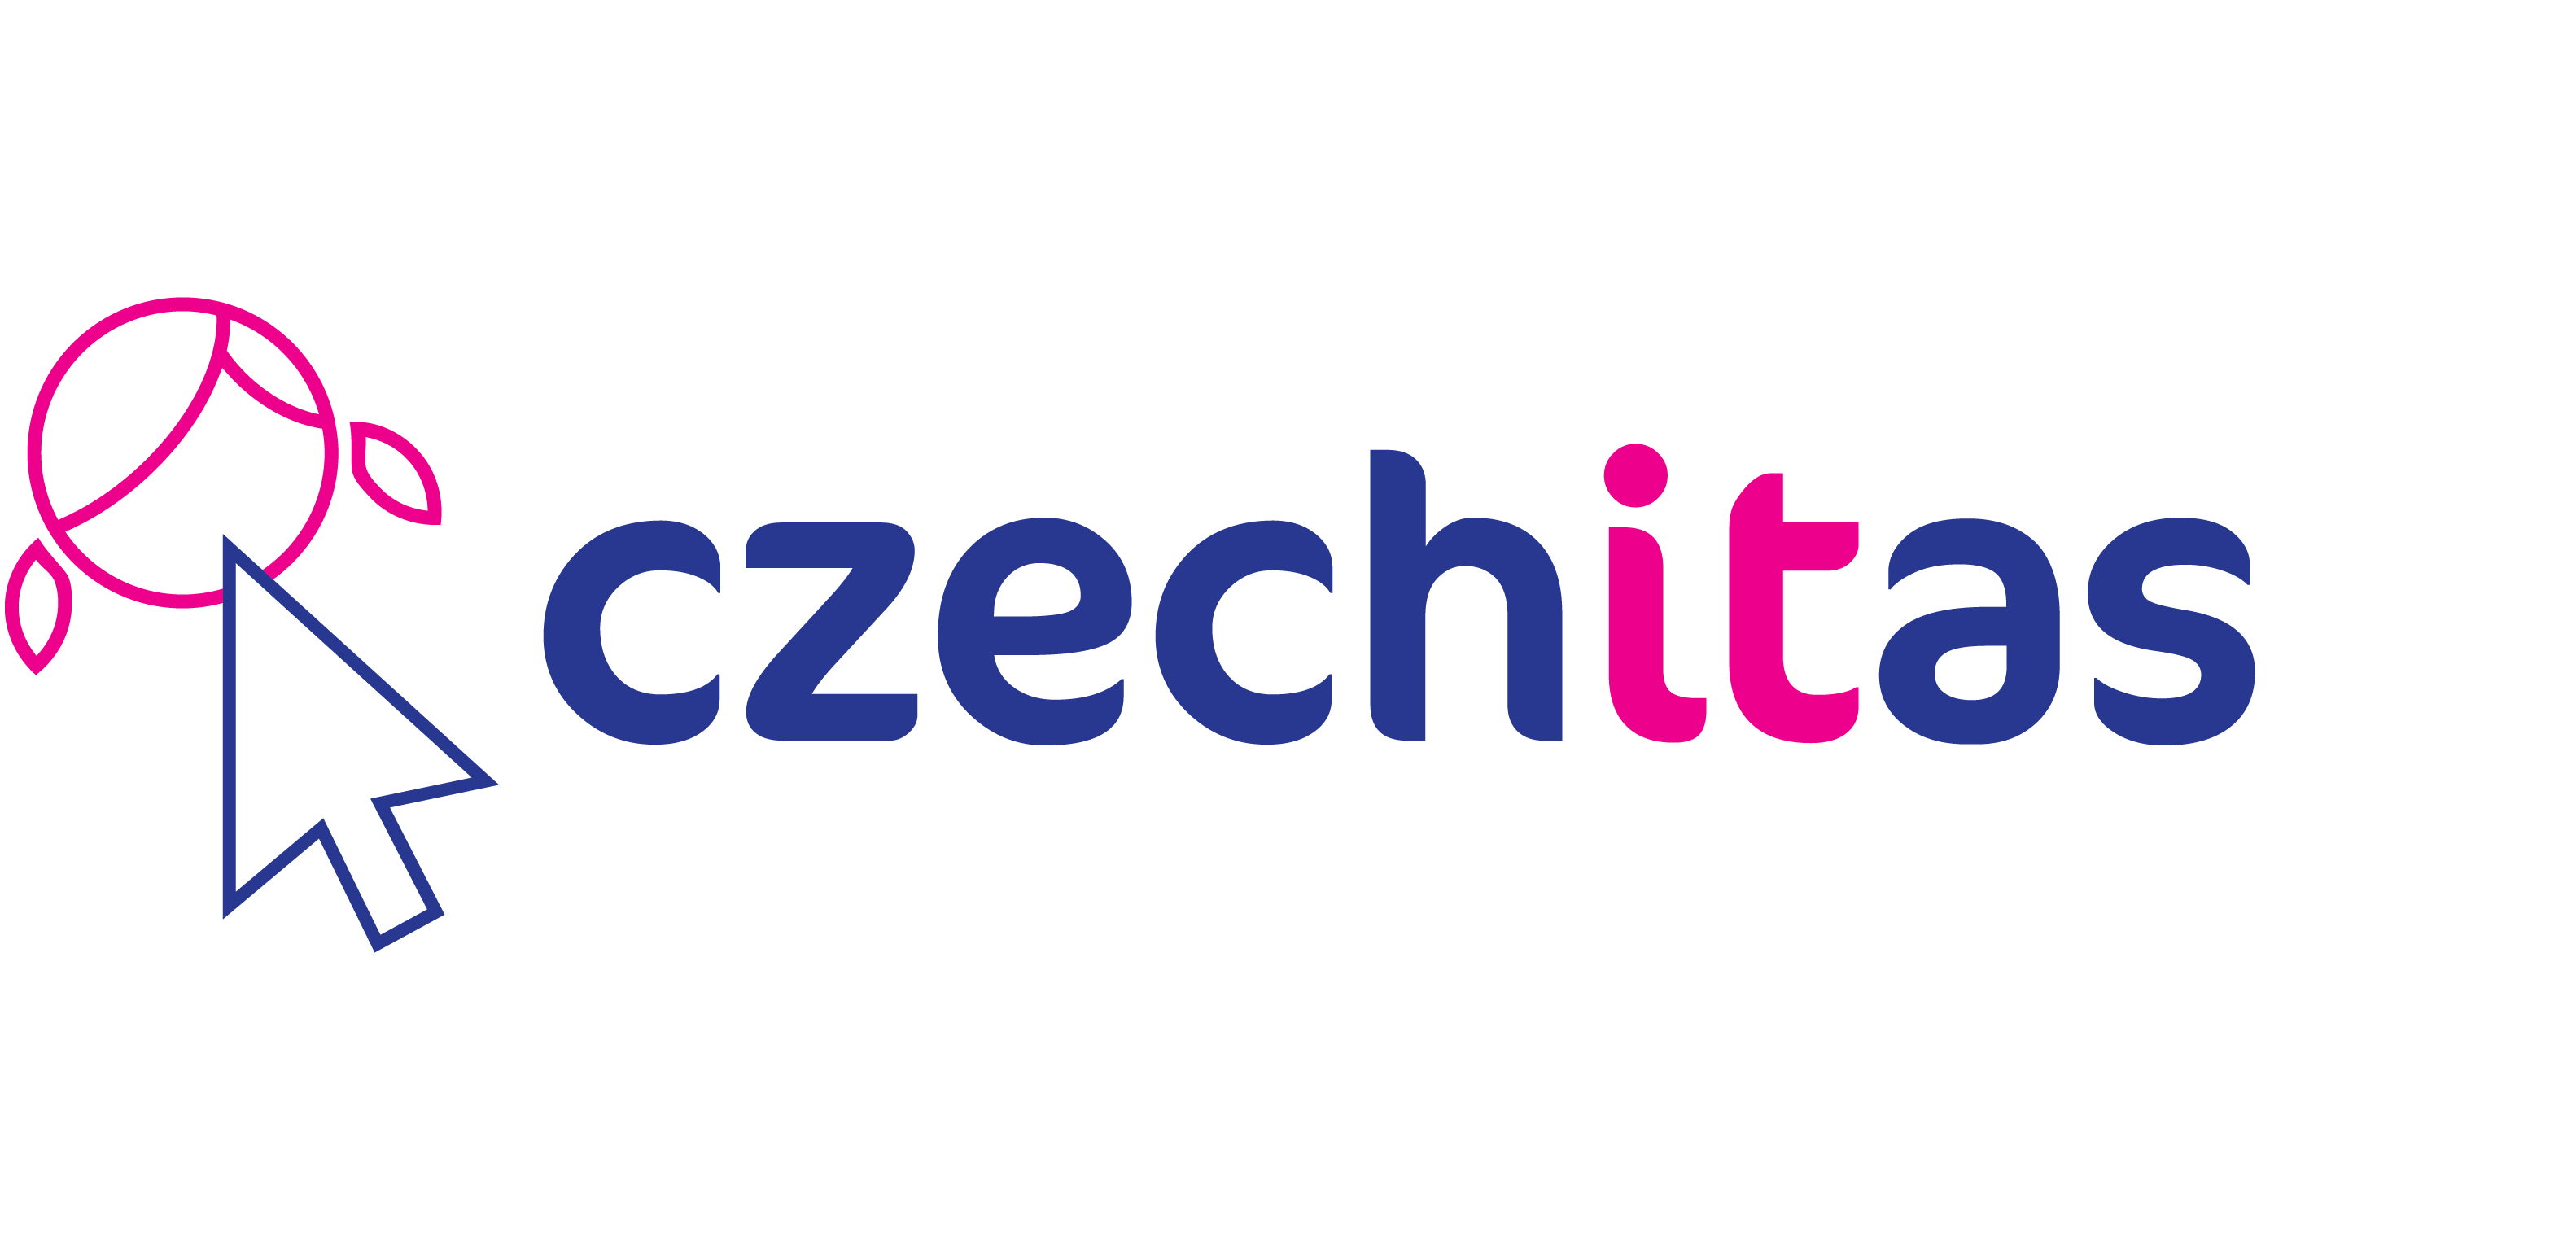 S Czechitas podporujeme ženy v IT a sdílíme vášeň pro inovace a rozvoj.